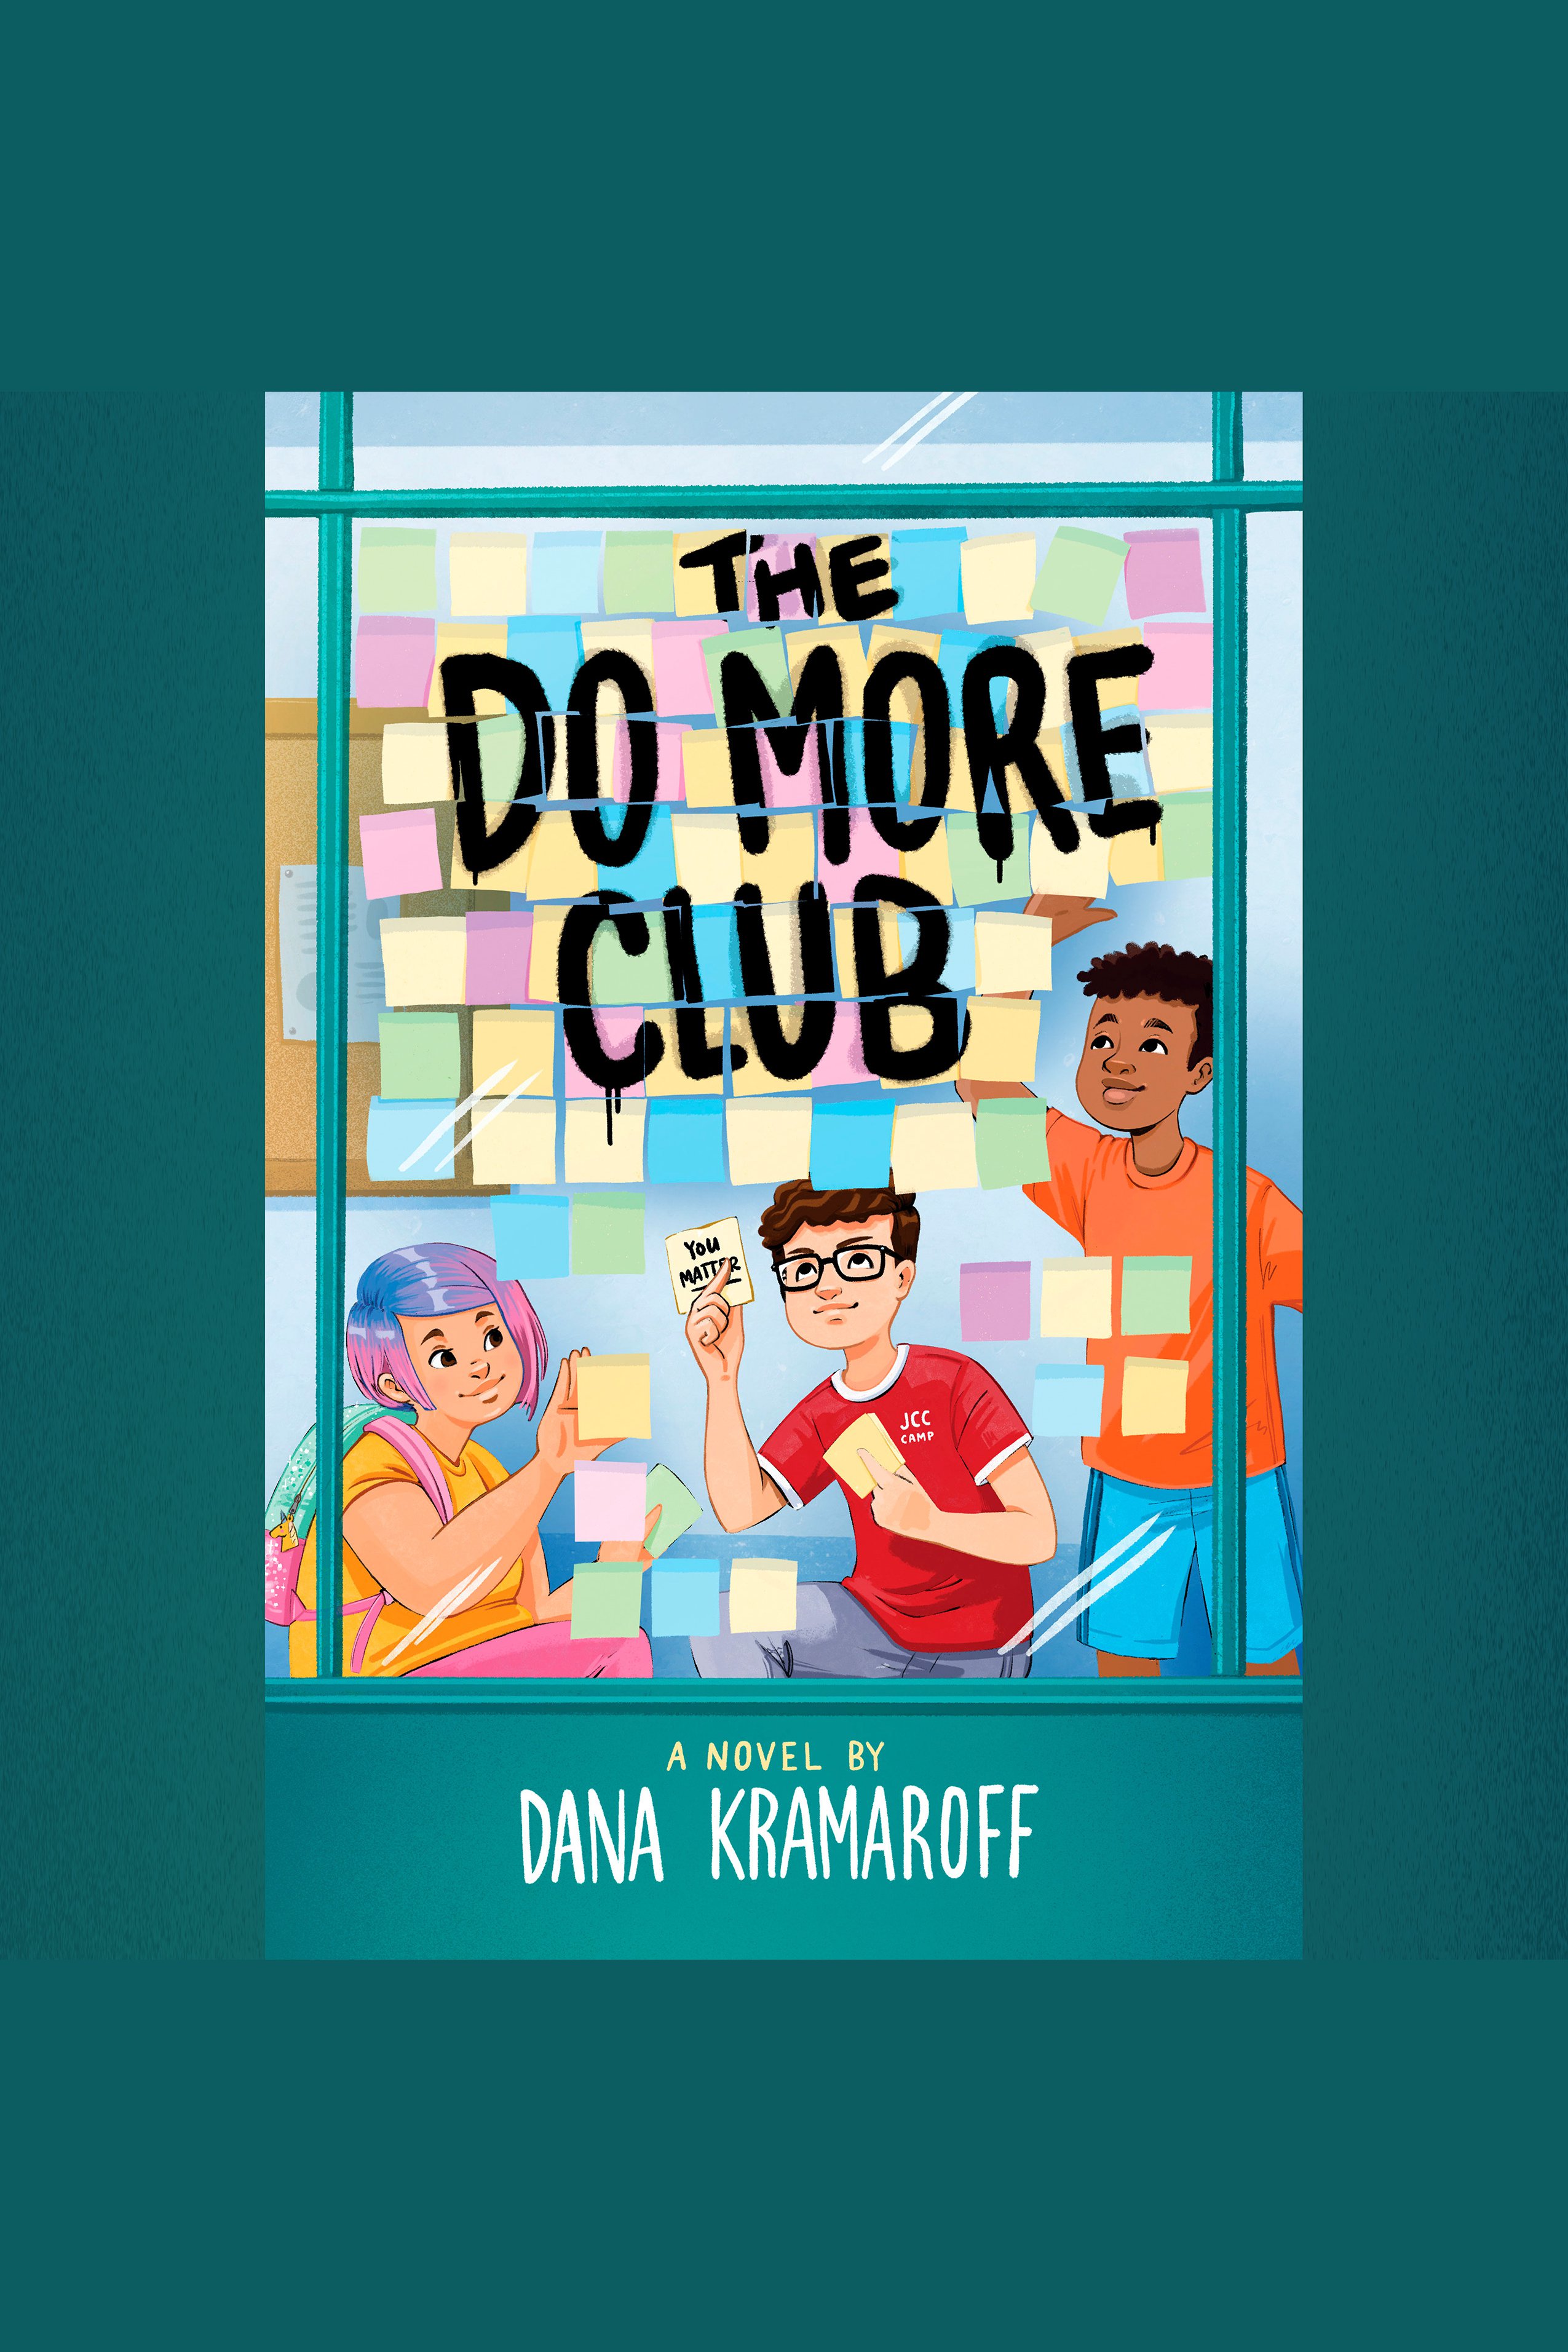 The Do More Club cover image